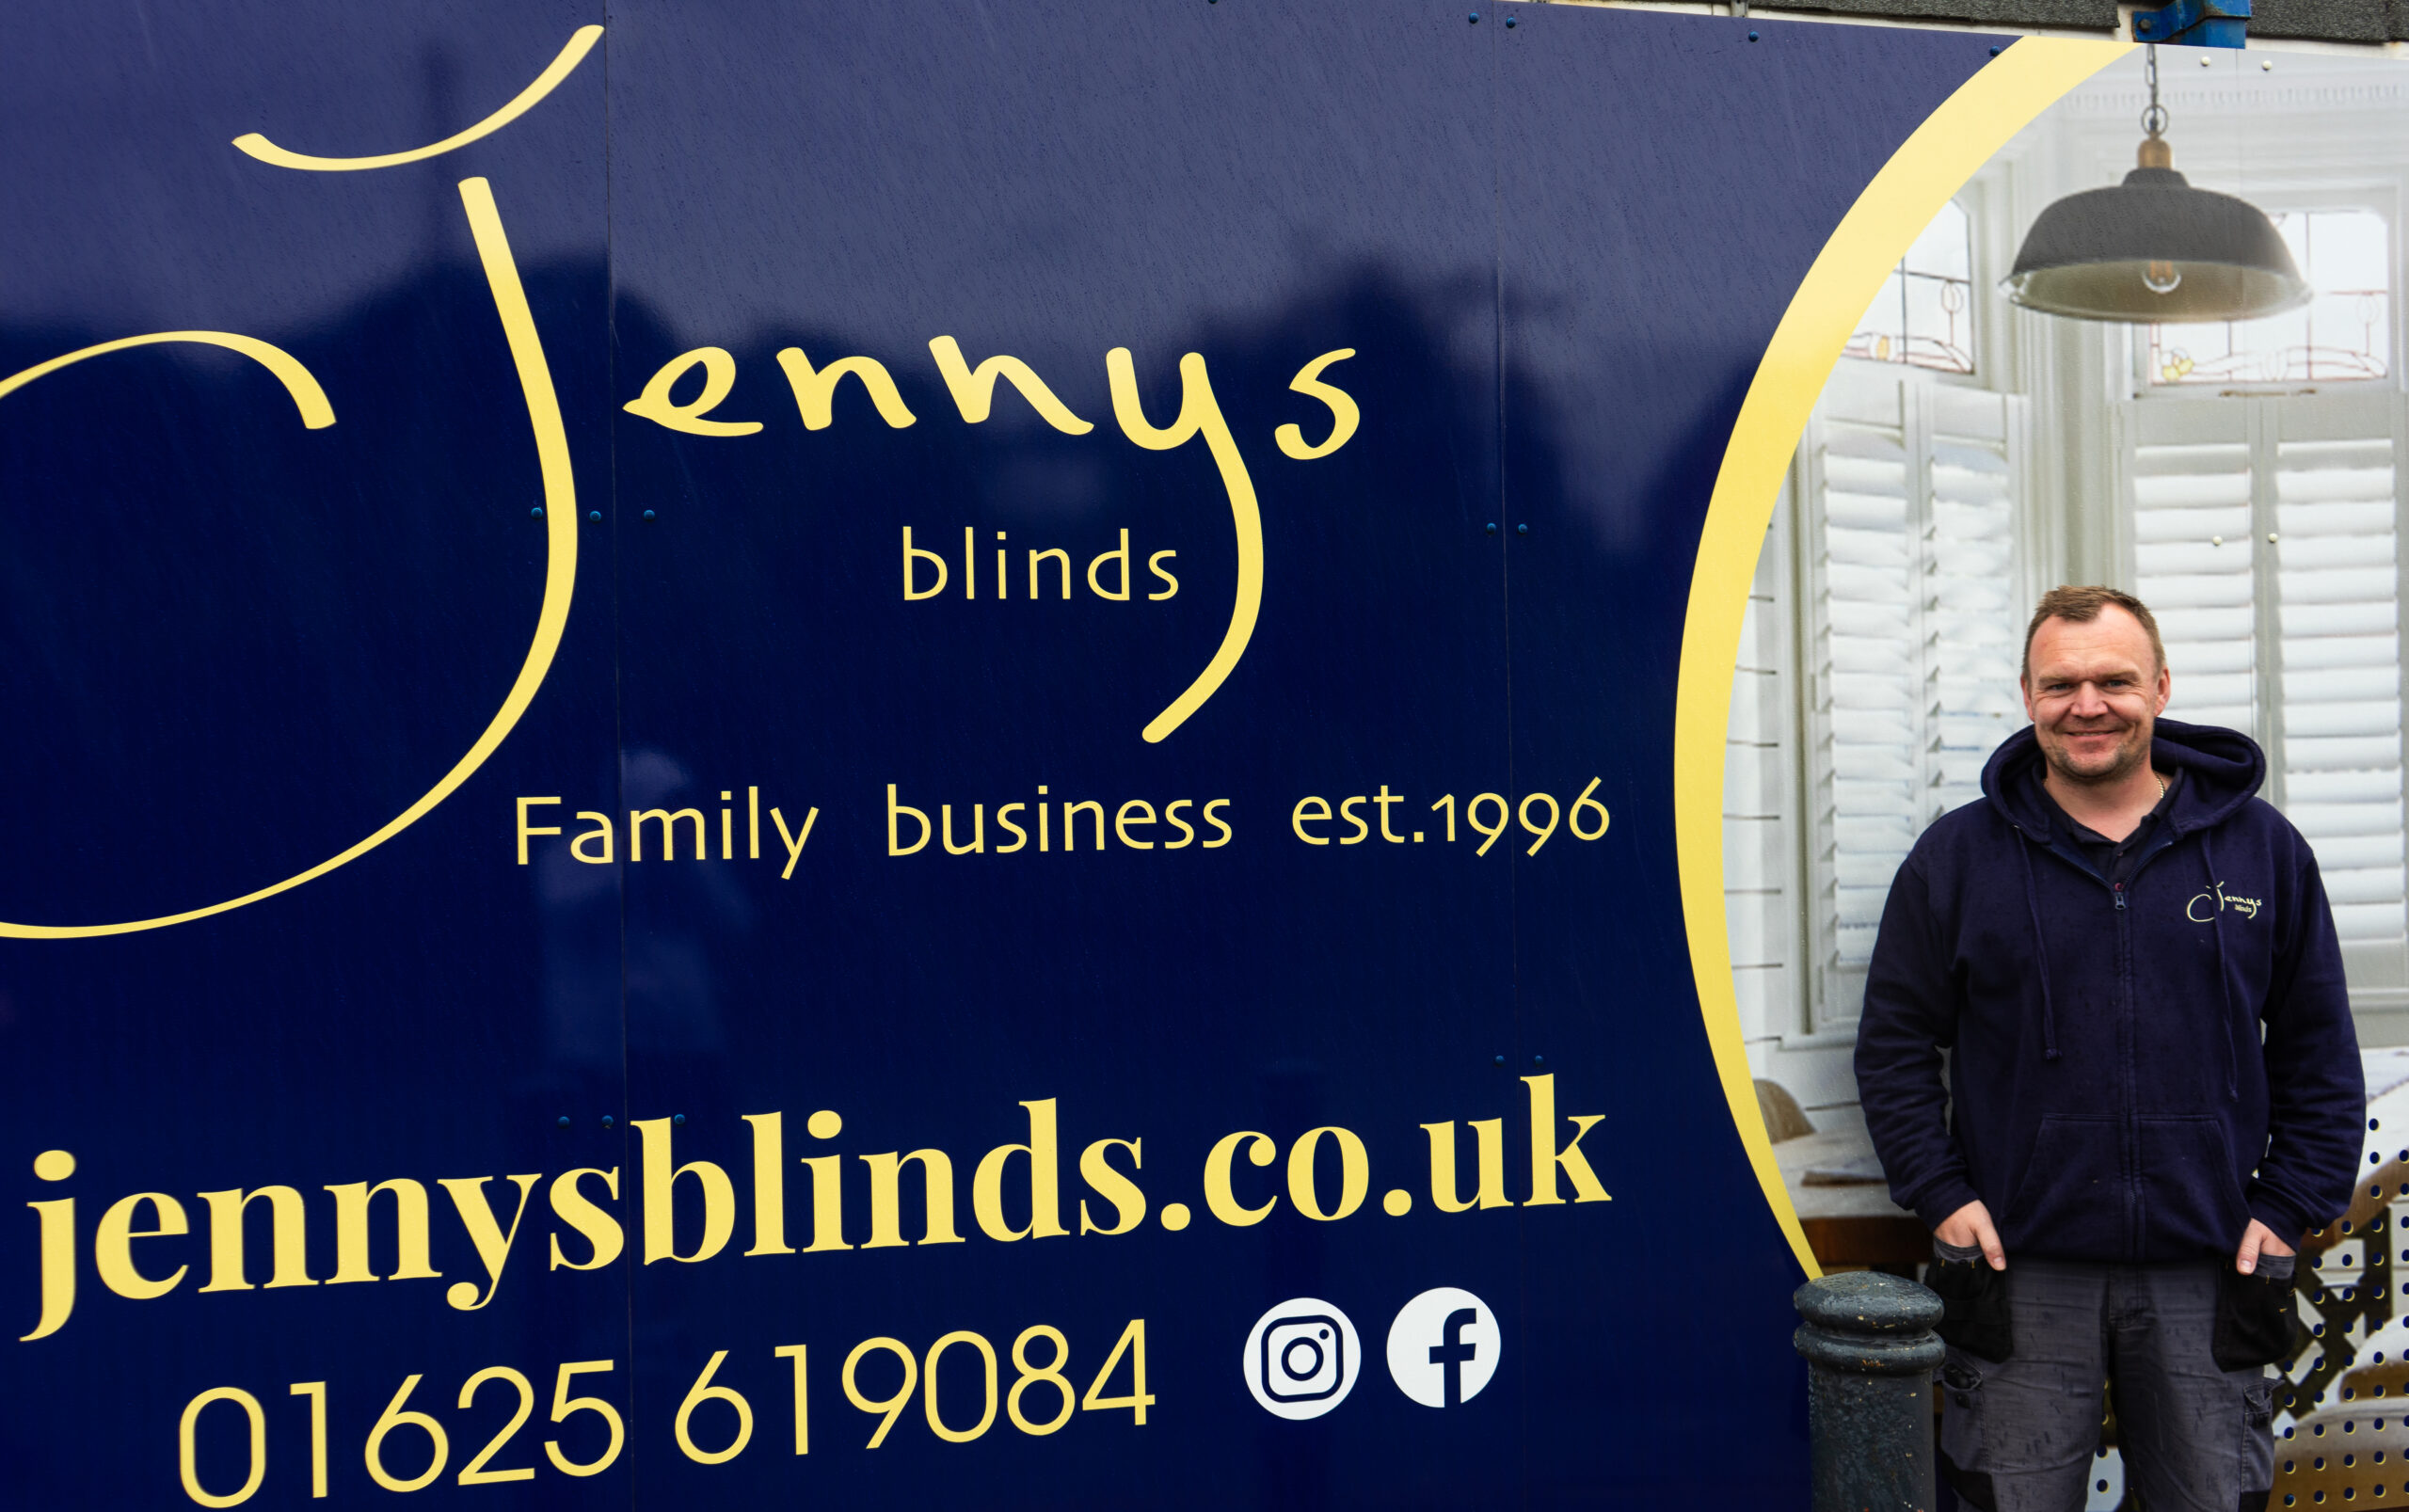 JENNYS BLINDS BECOME MAJOR CLUB SPONSOR